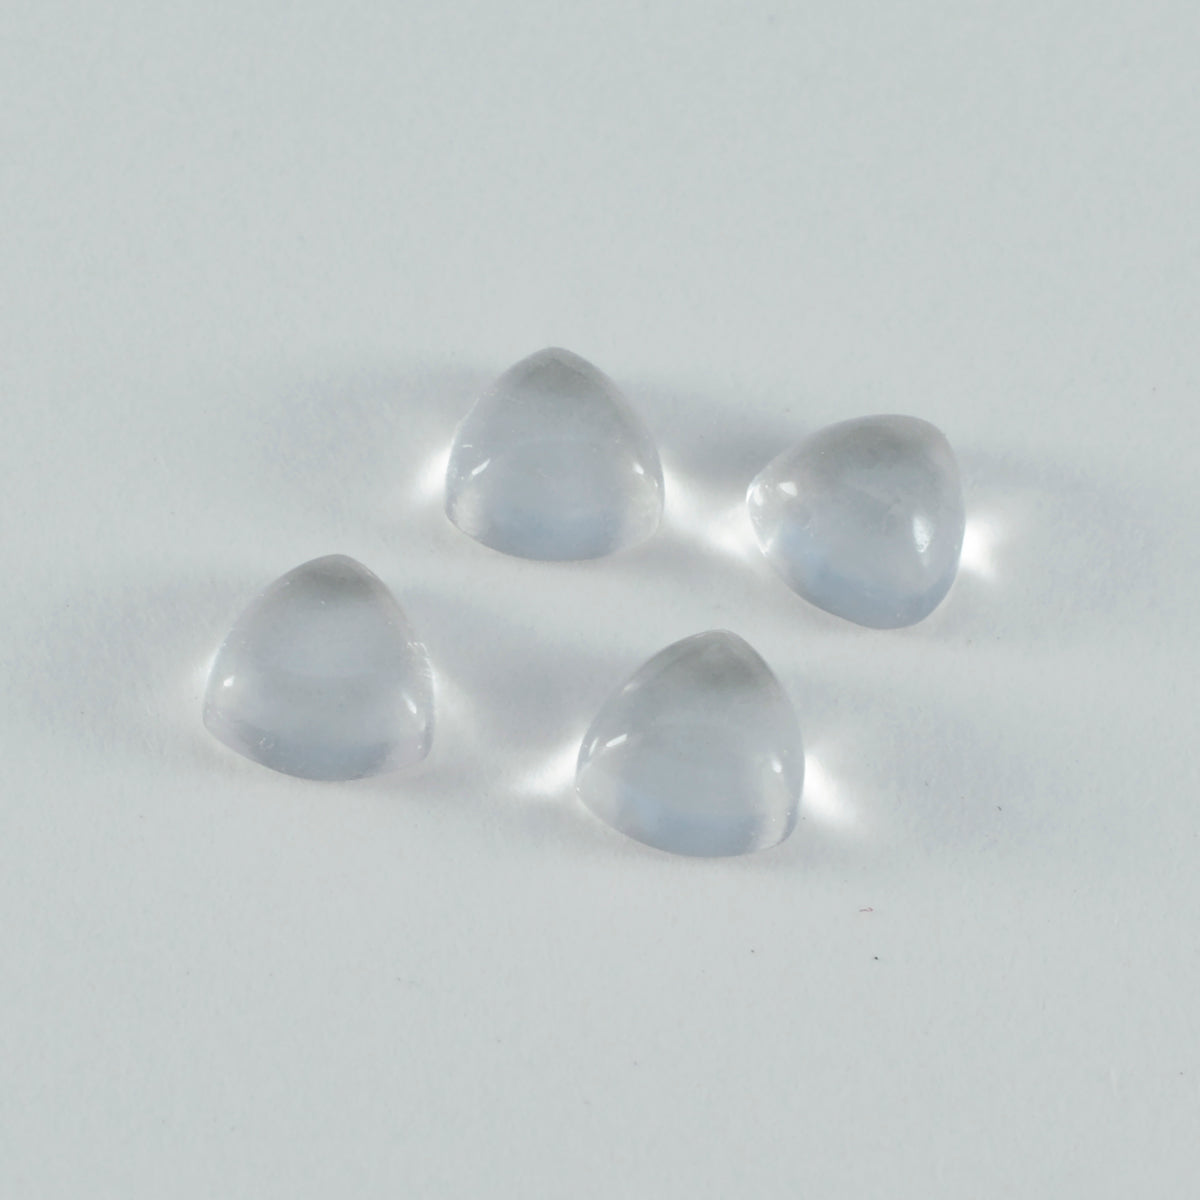 riyogems 1pc ホワイト クリスタル クォーツ カボション 7x7 mm 兆形状驚くべき品質の宝石